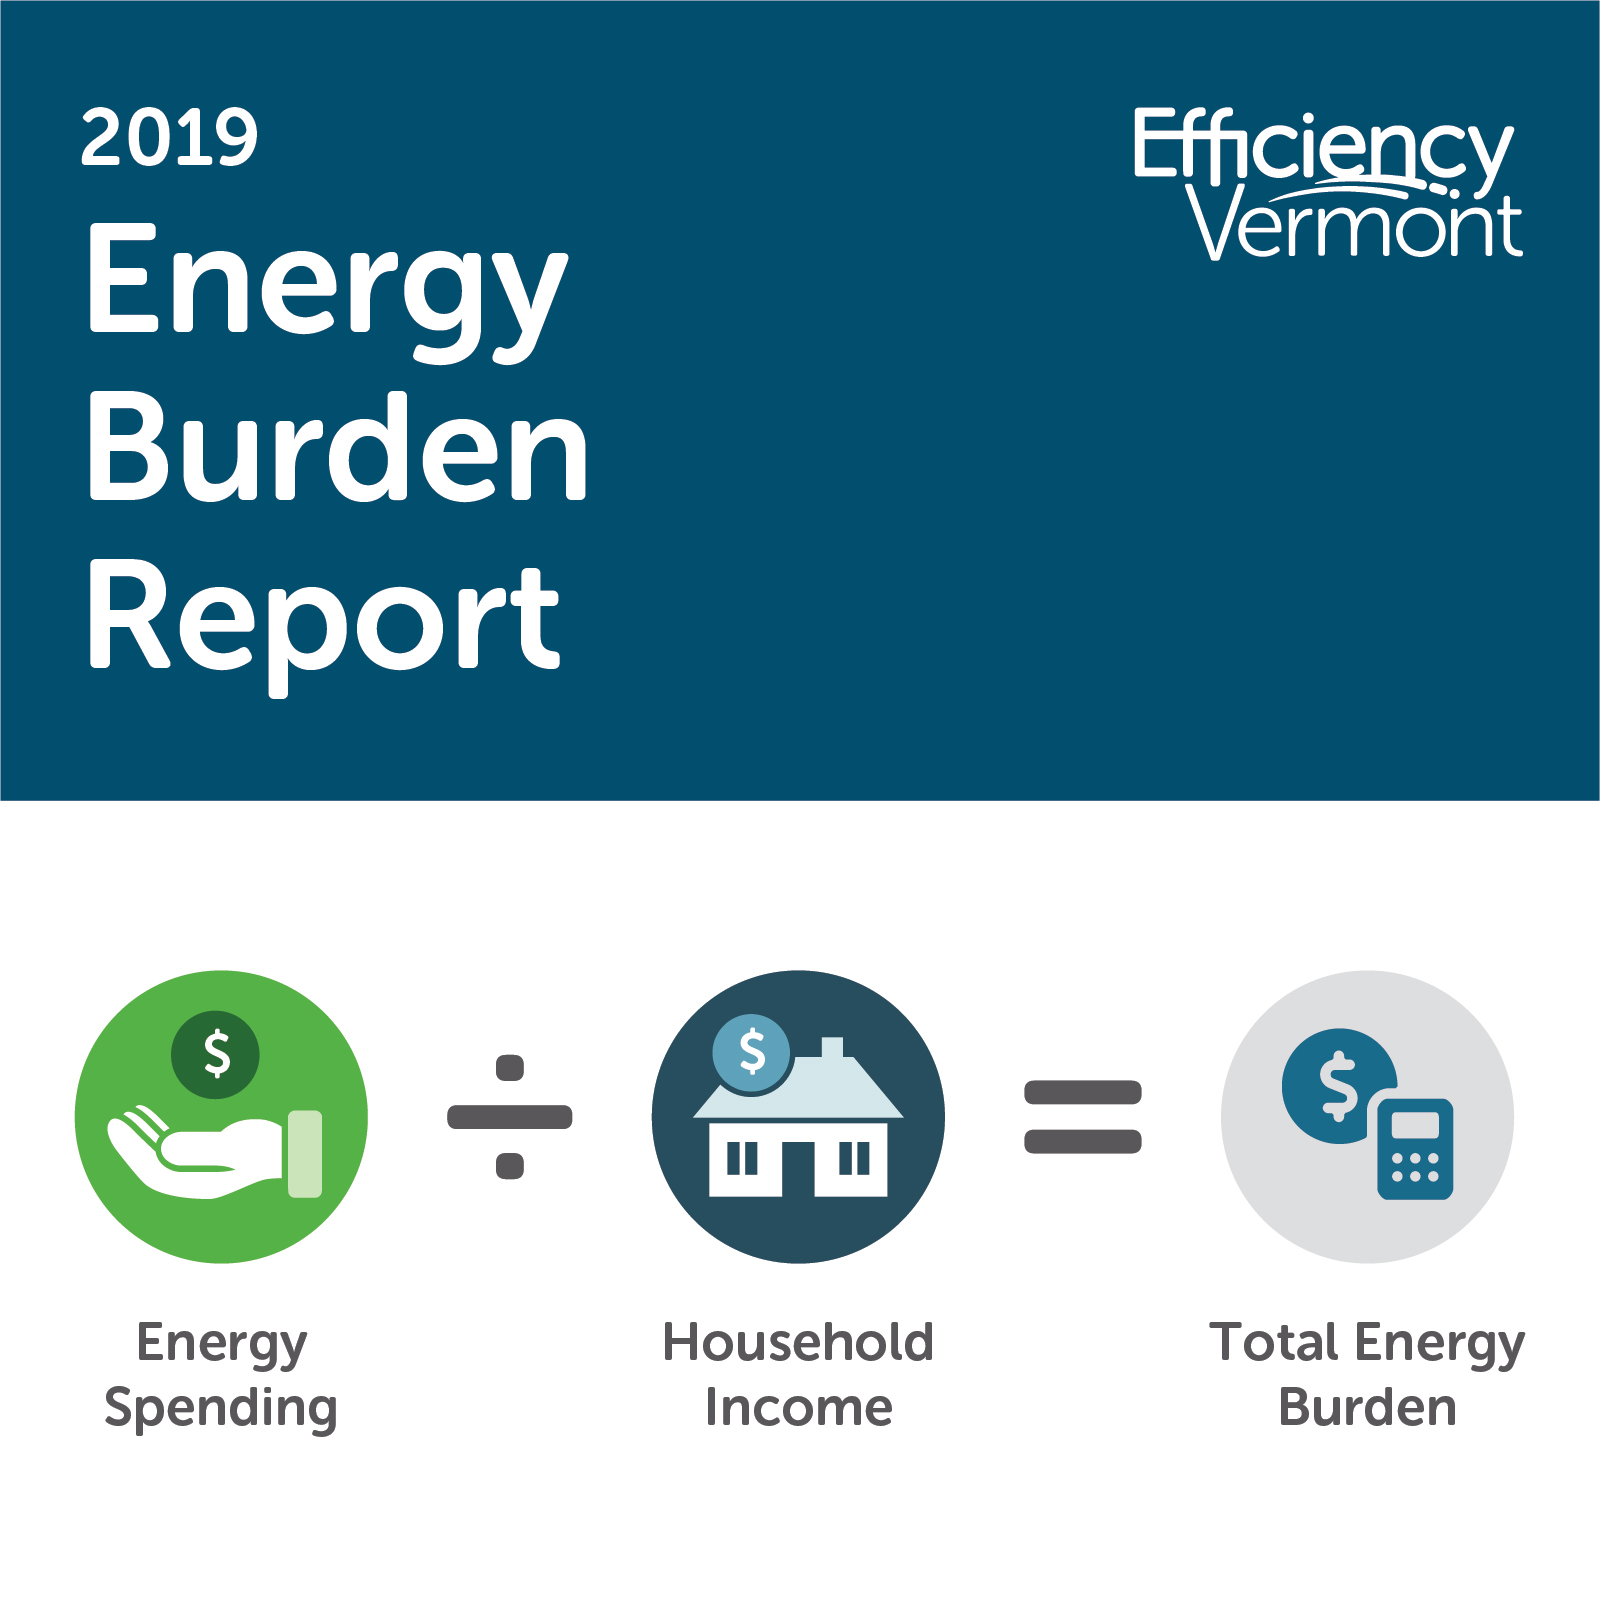 vermont-s-total-energy-burden-by-town-efficiency-vermont